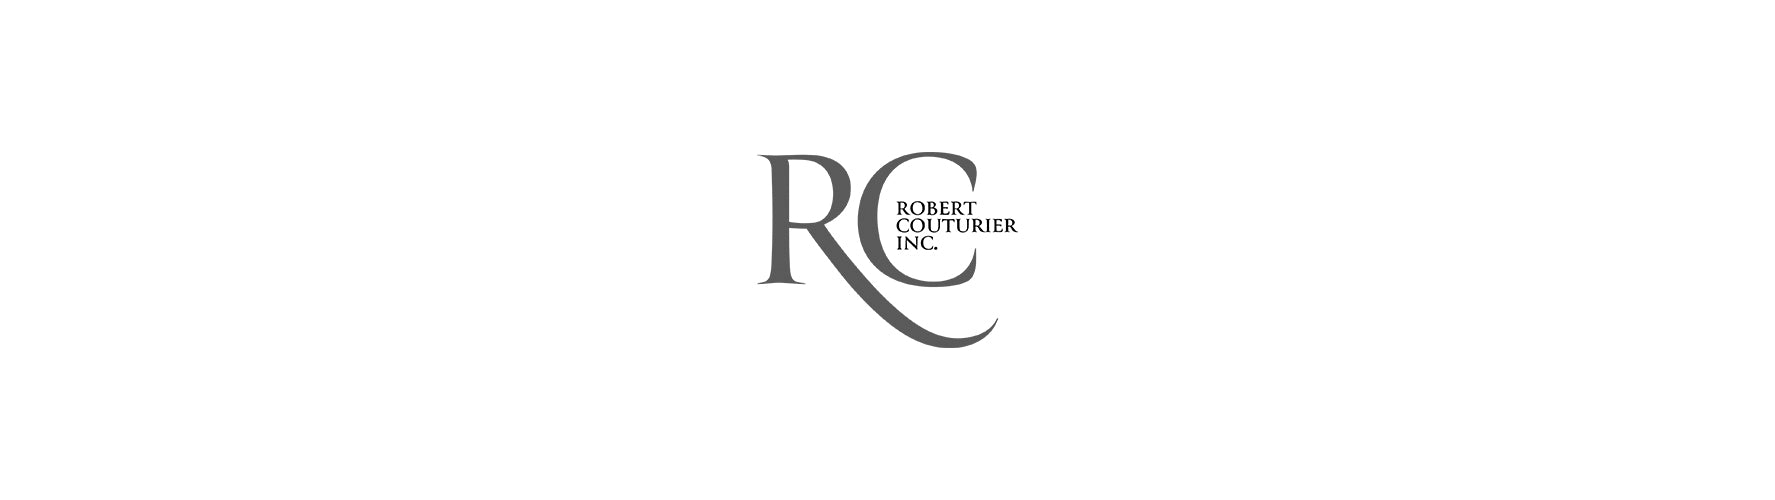 Robert Couturier interior design logo.